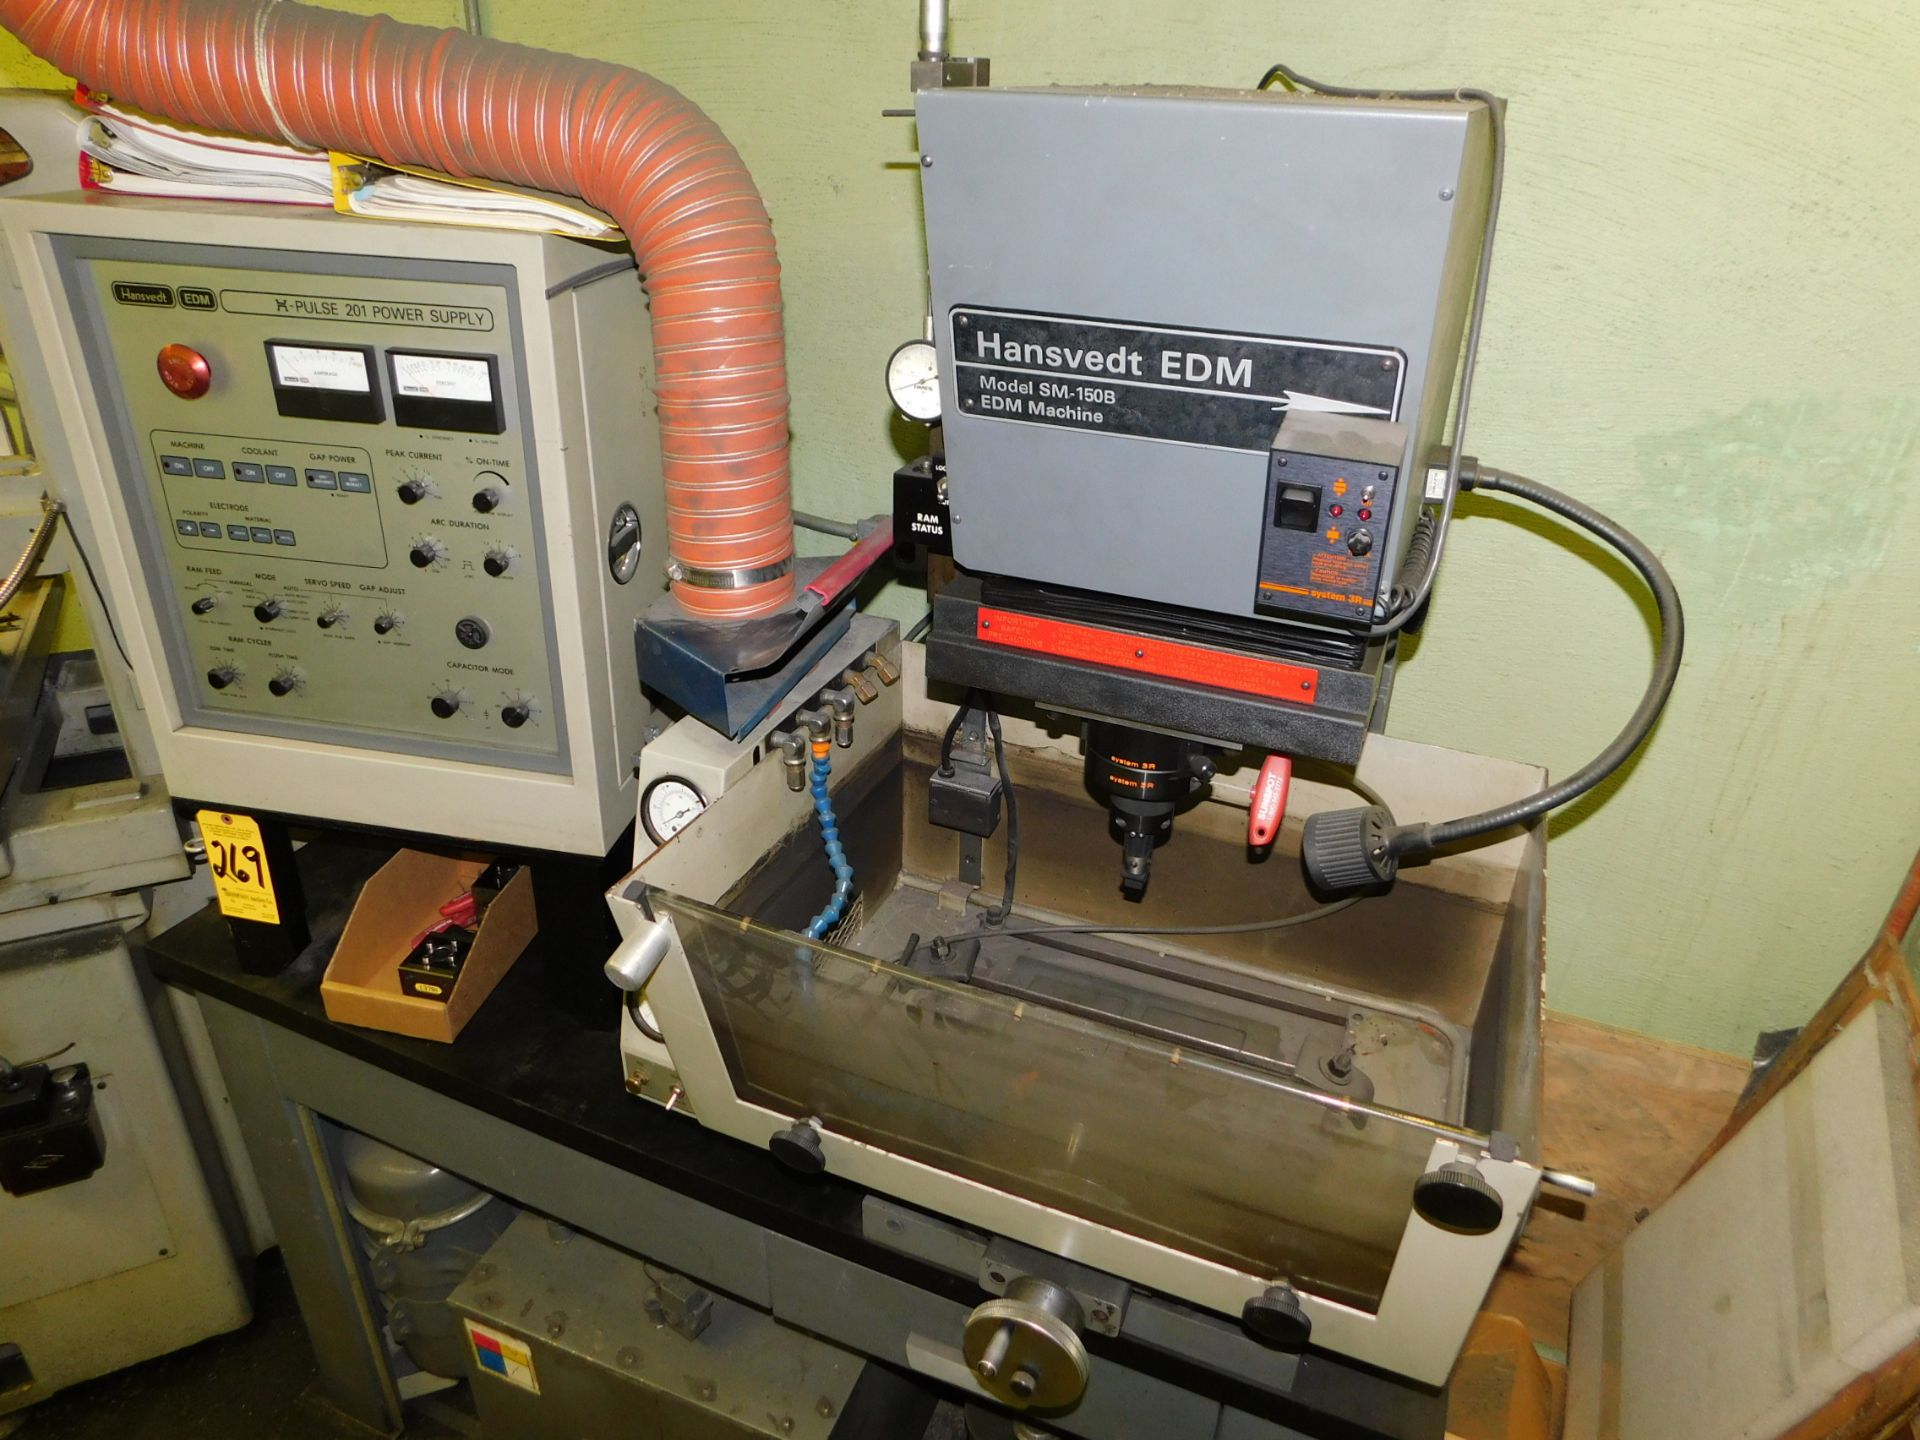 Hansvedt Model SM-150B Bench Top EDM Machine, s/n B08323, Pulse 201 Power Supply, 20 Amp, 6 In. X - Image 3 of 9